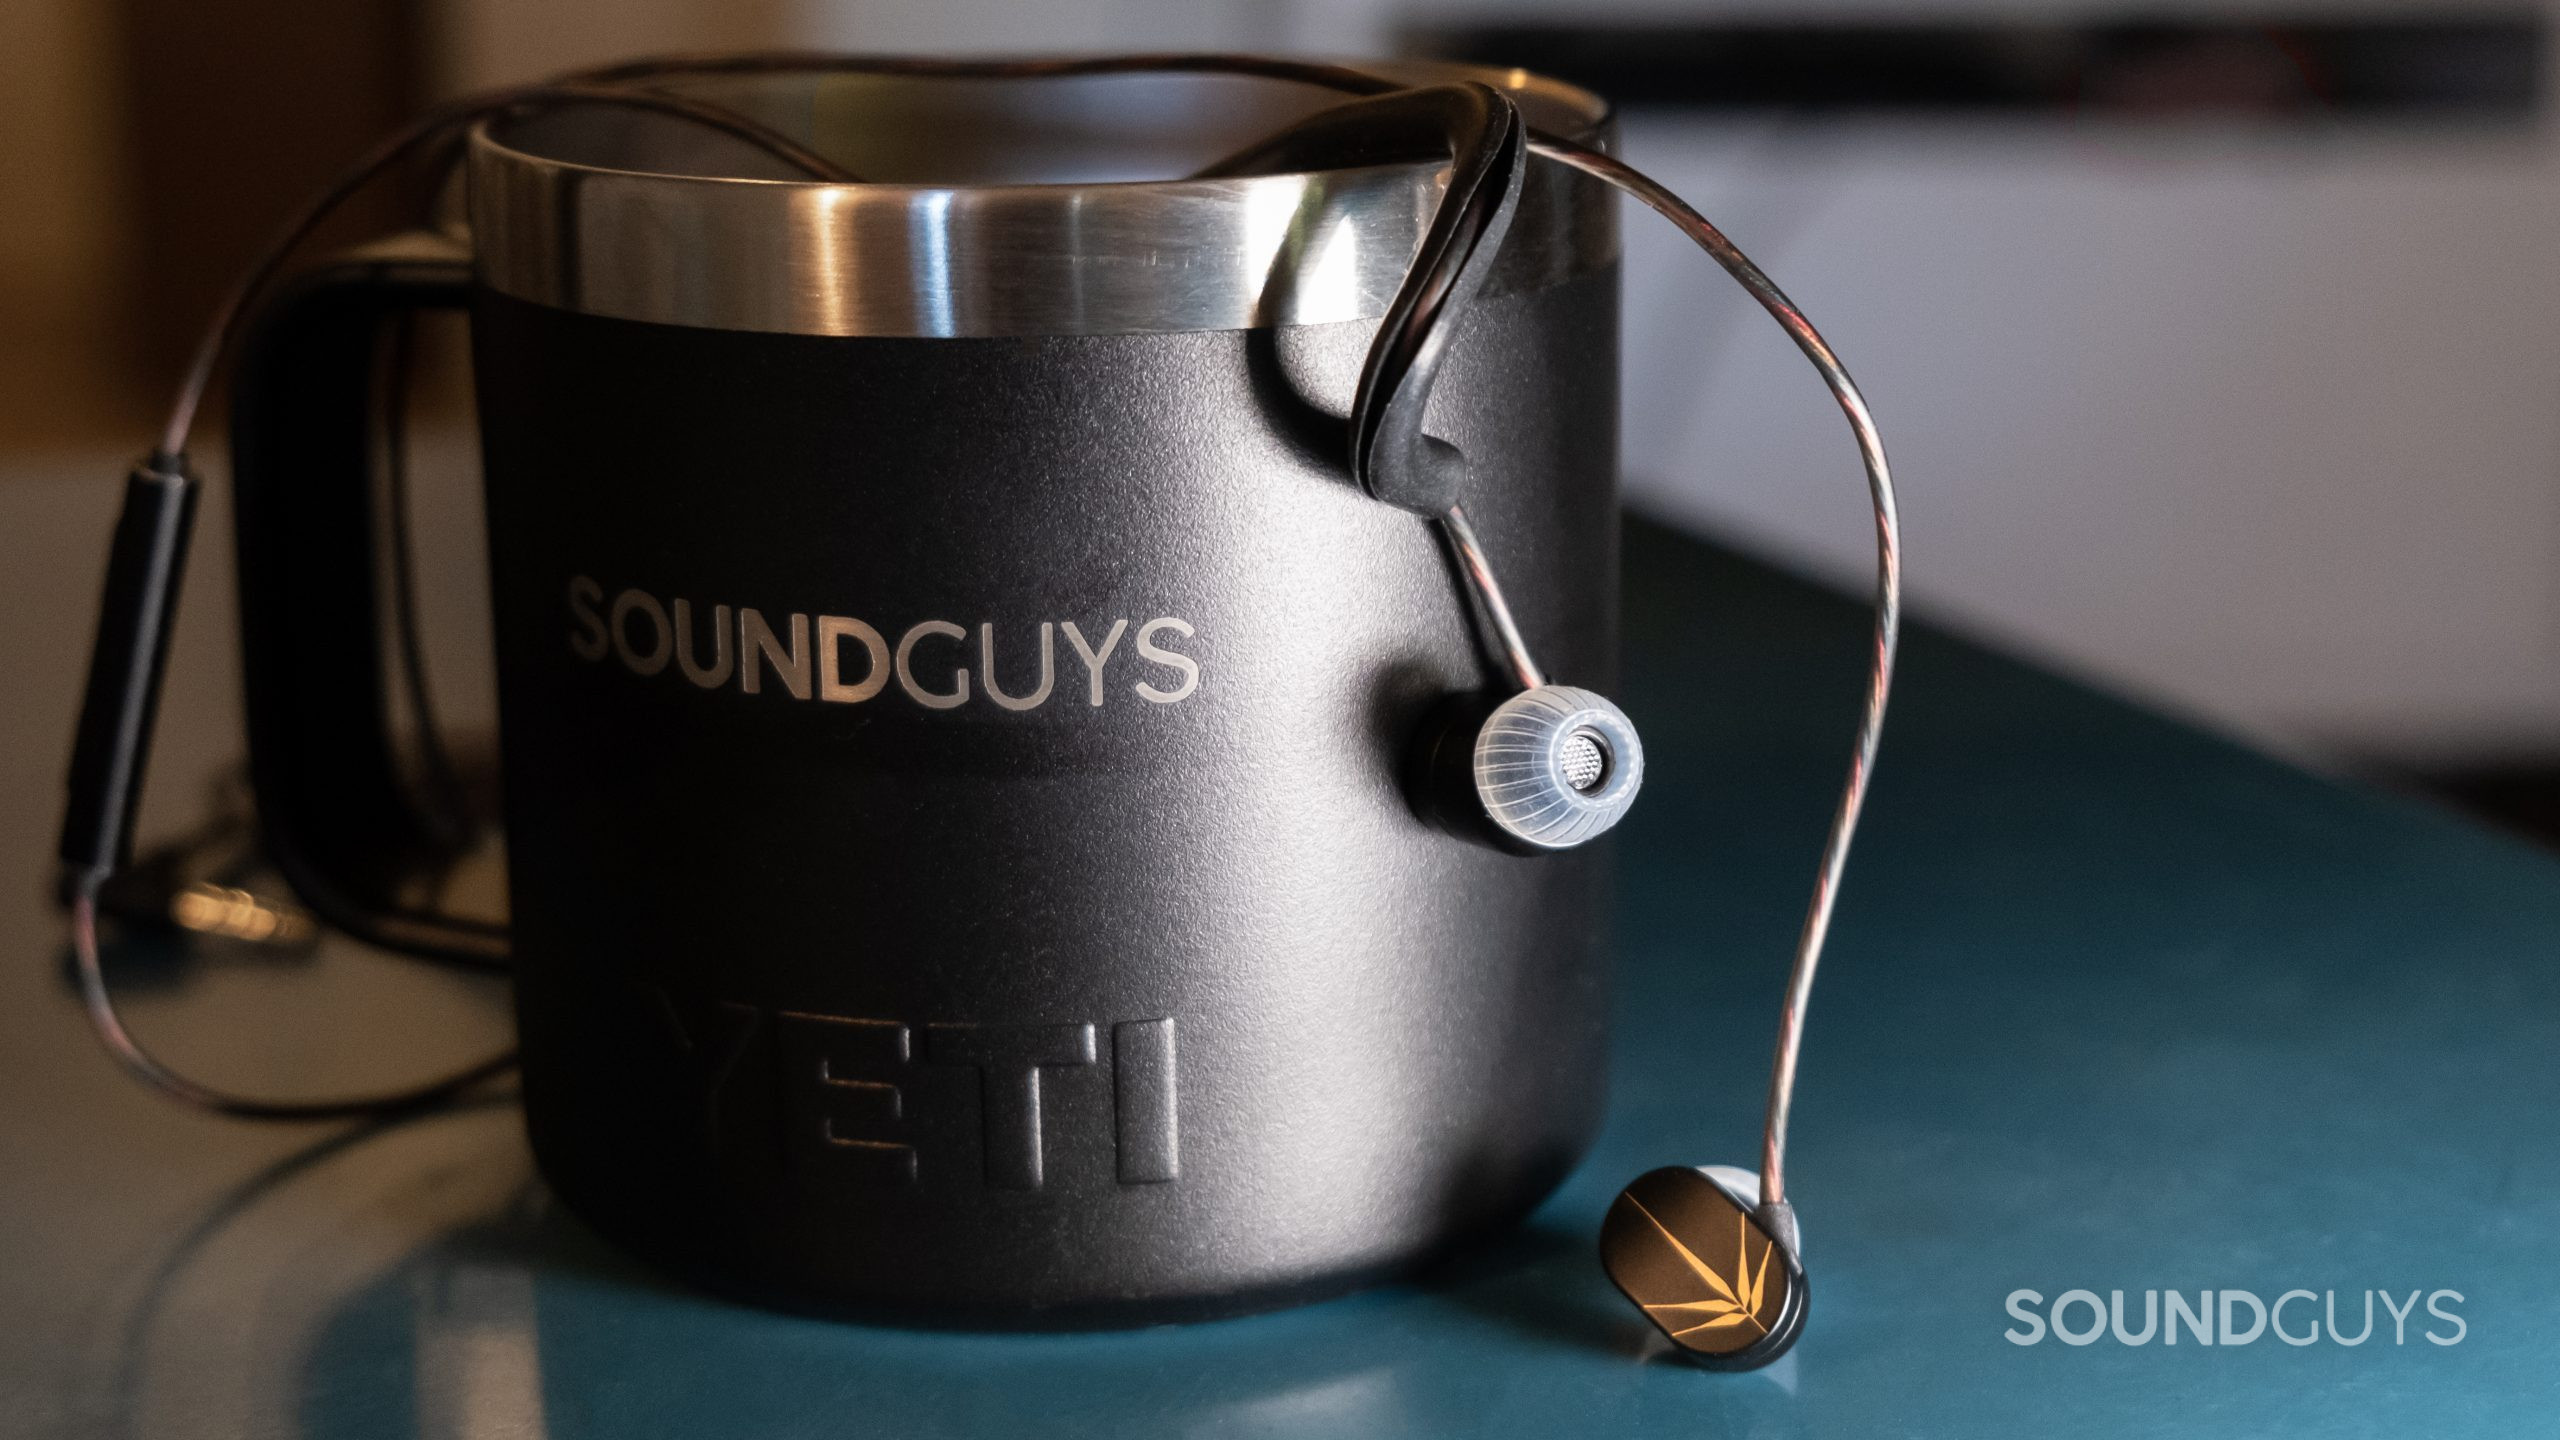 The Moondrop Chu hangs over the side of a SoundGuys branded mug on a teal metal table.